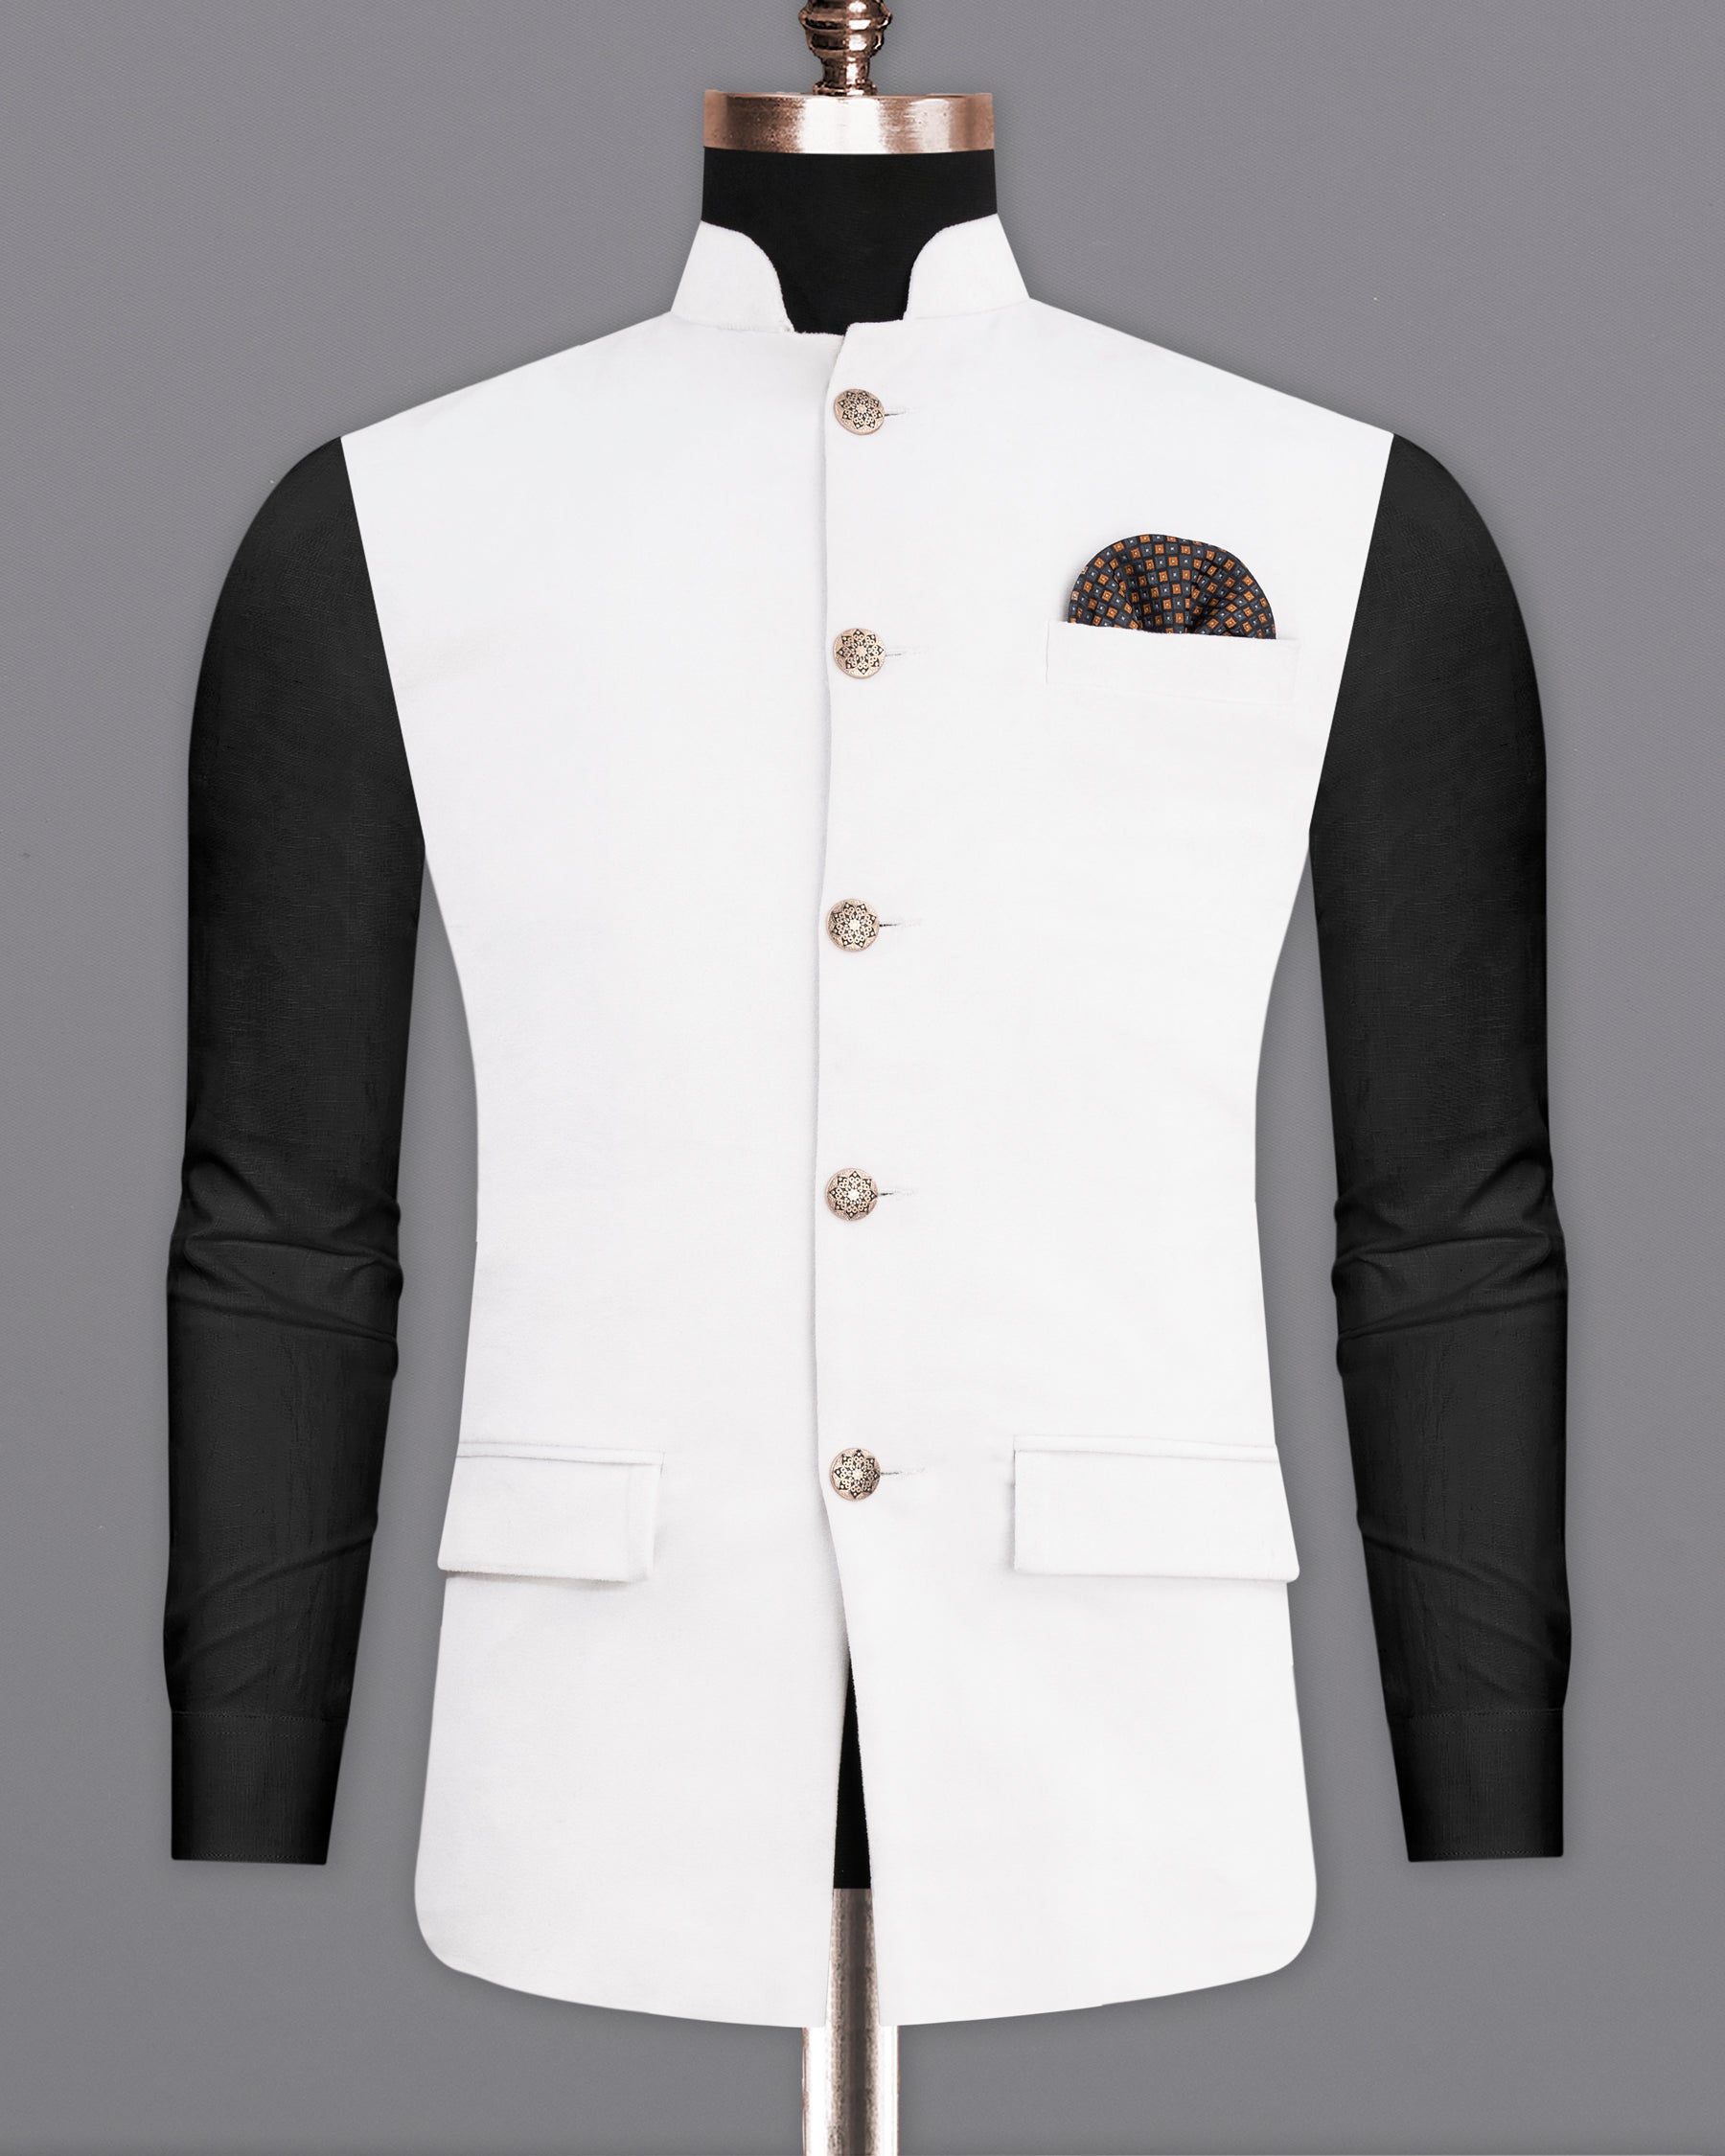 Mens white kurta outfit | Stylish men wear, White kurta, Stylish men